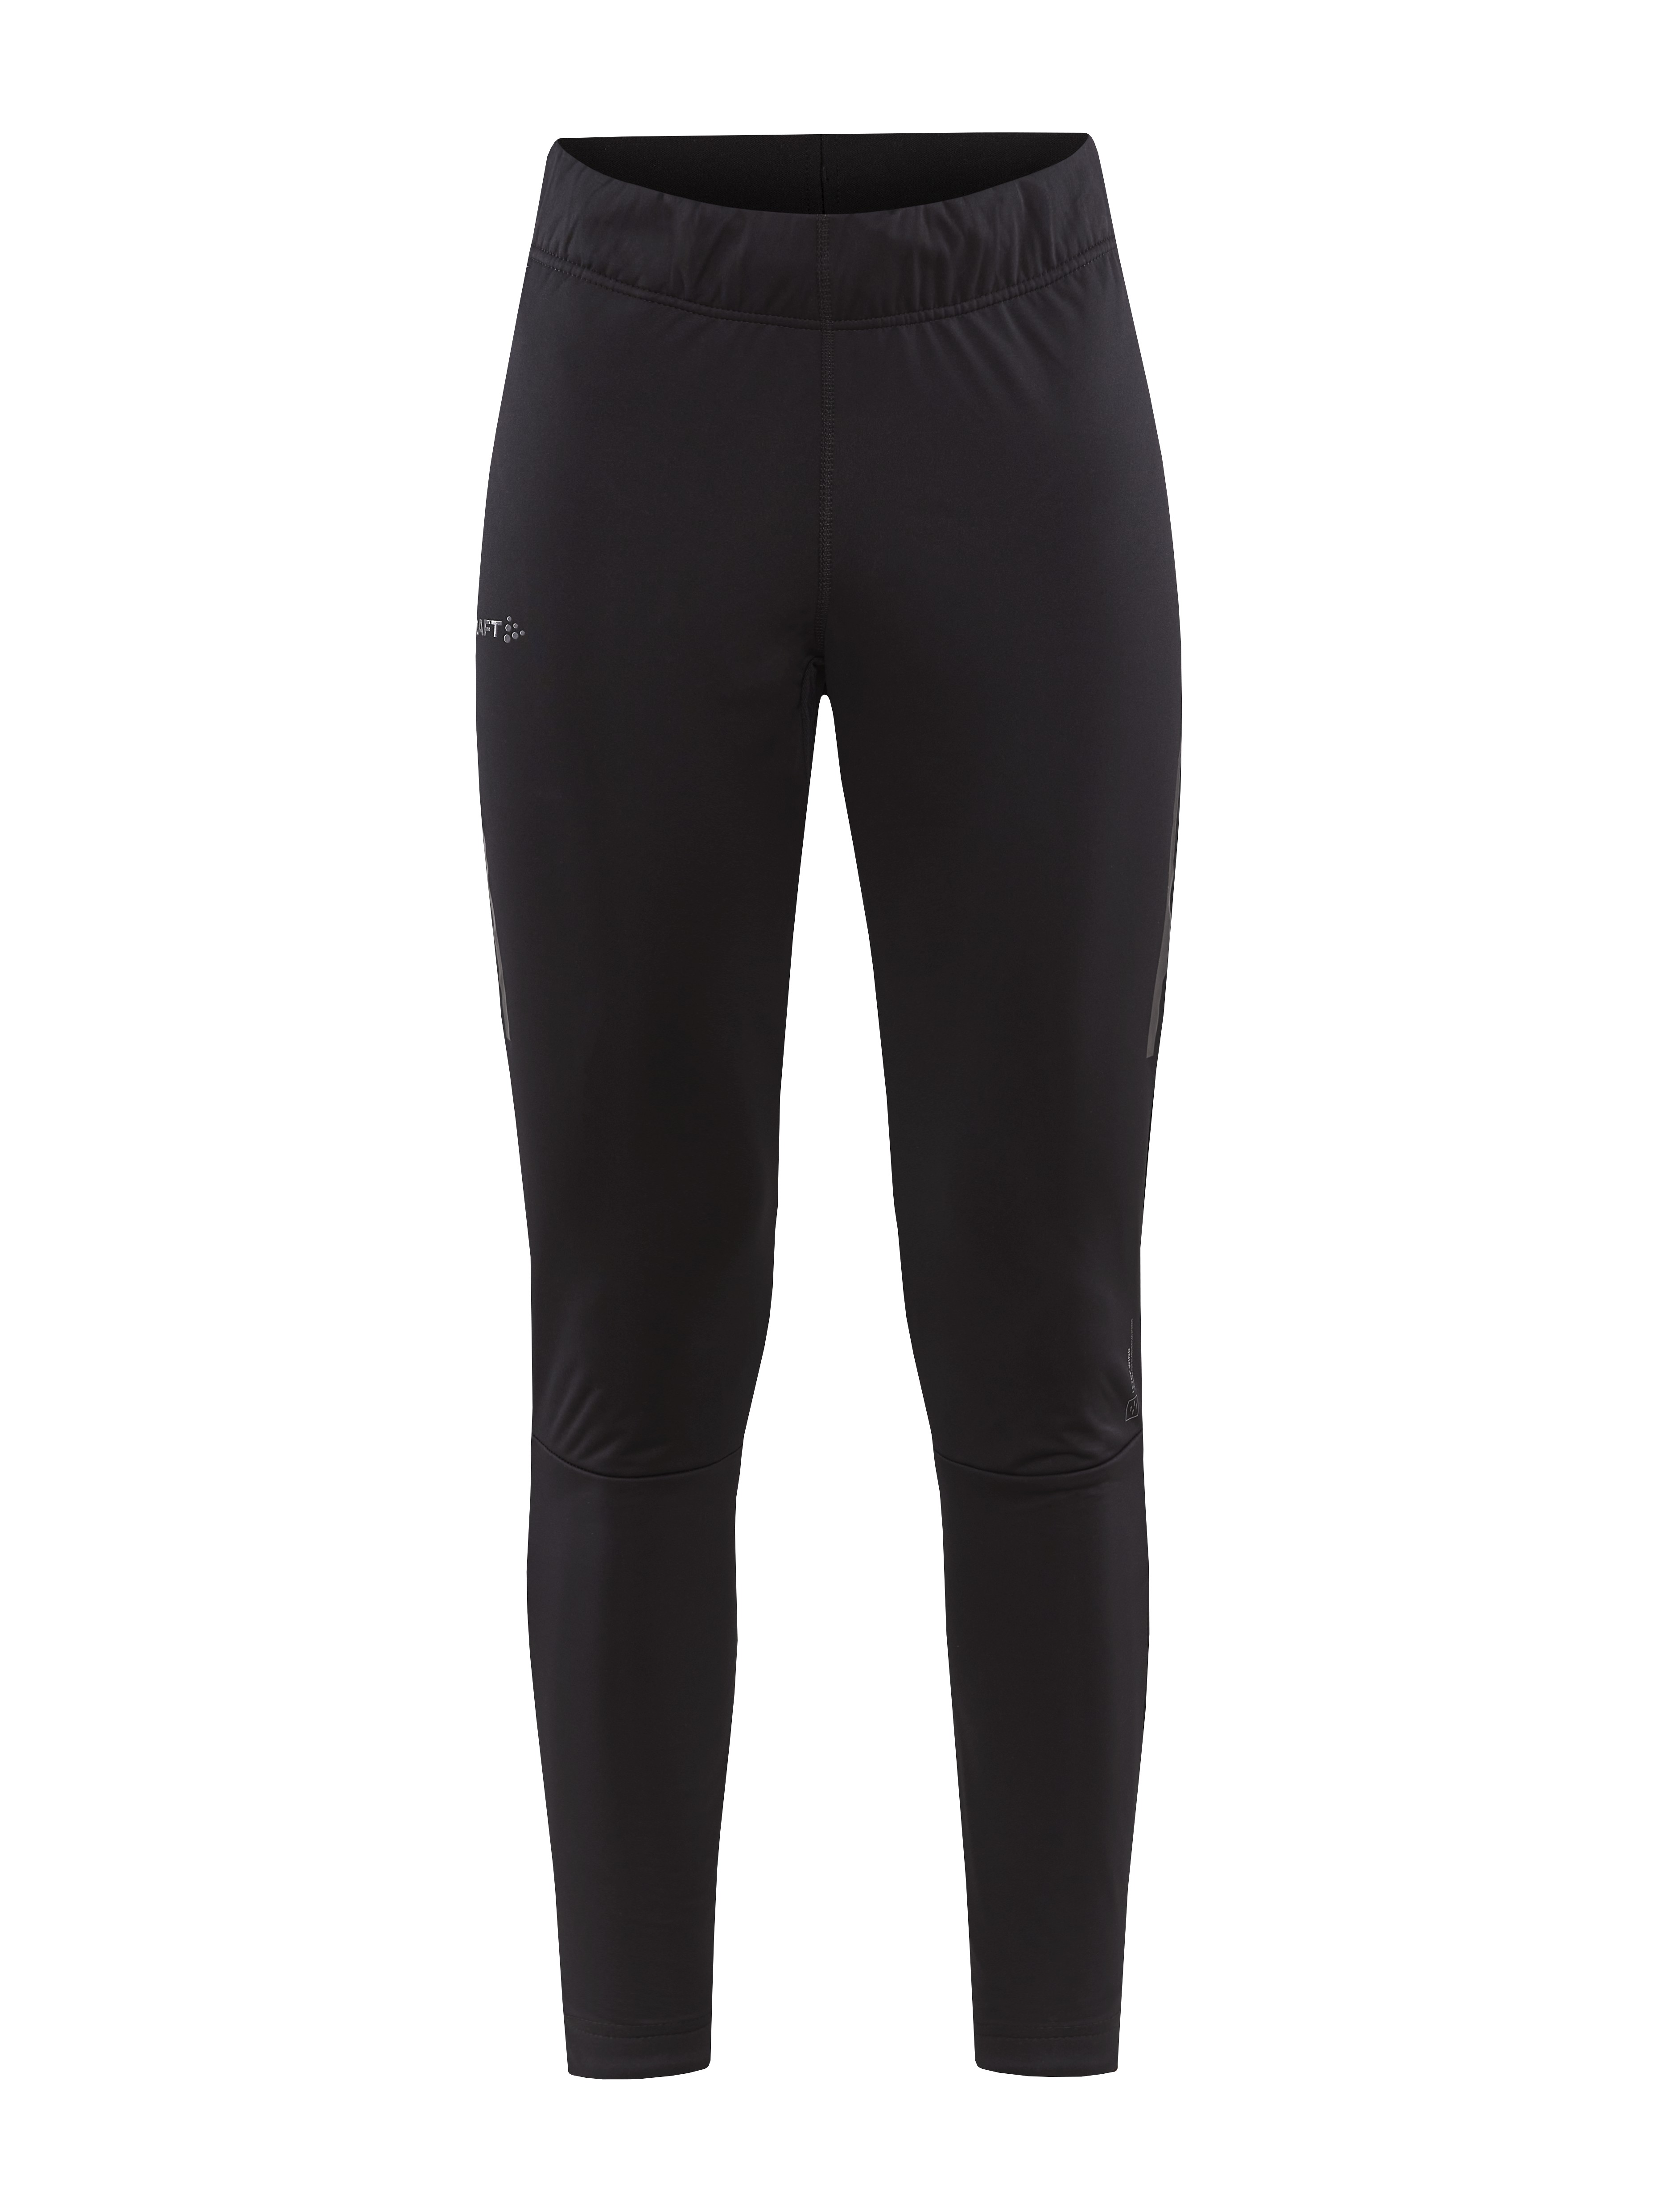 Legging woman Nike Sportswear Club - Nike - Training Pants - Teamwear